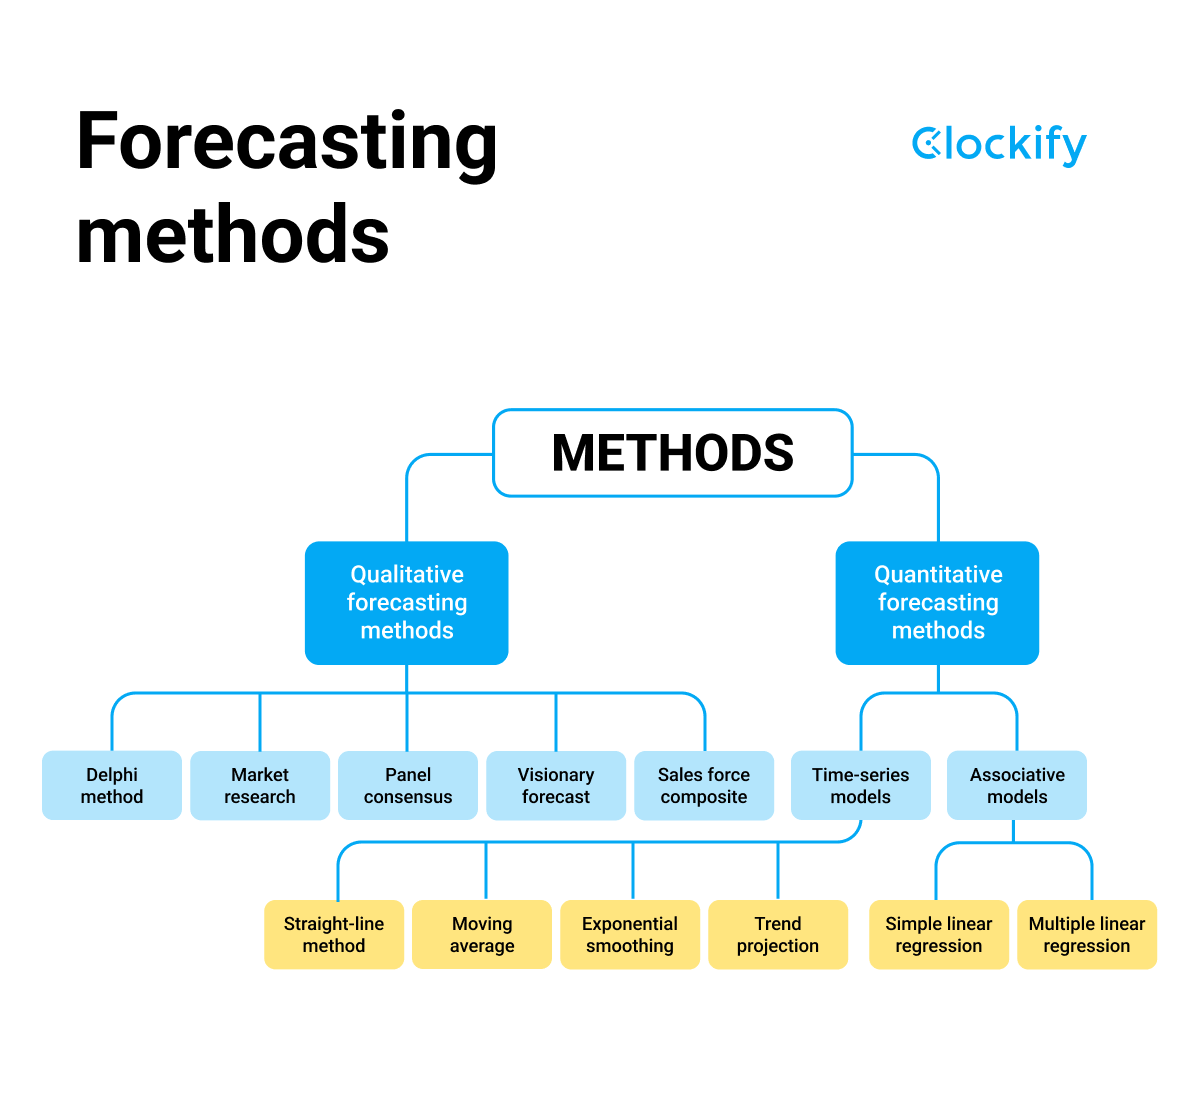 Main forecasting methods